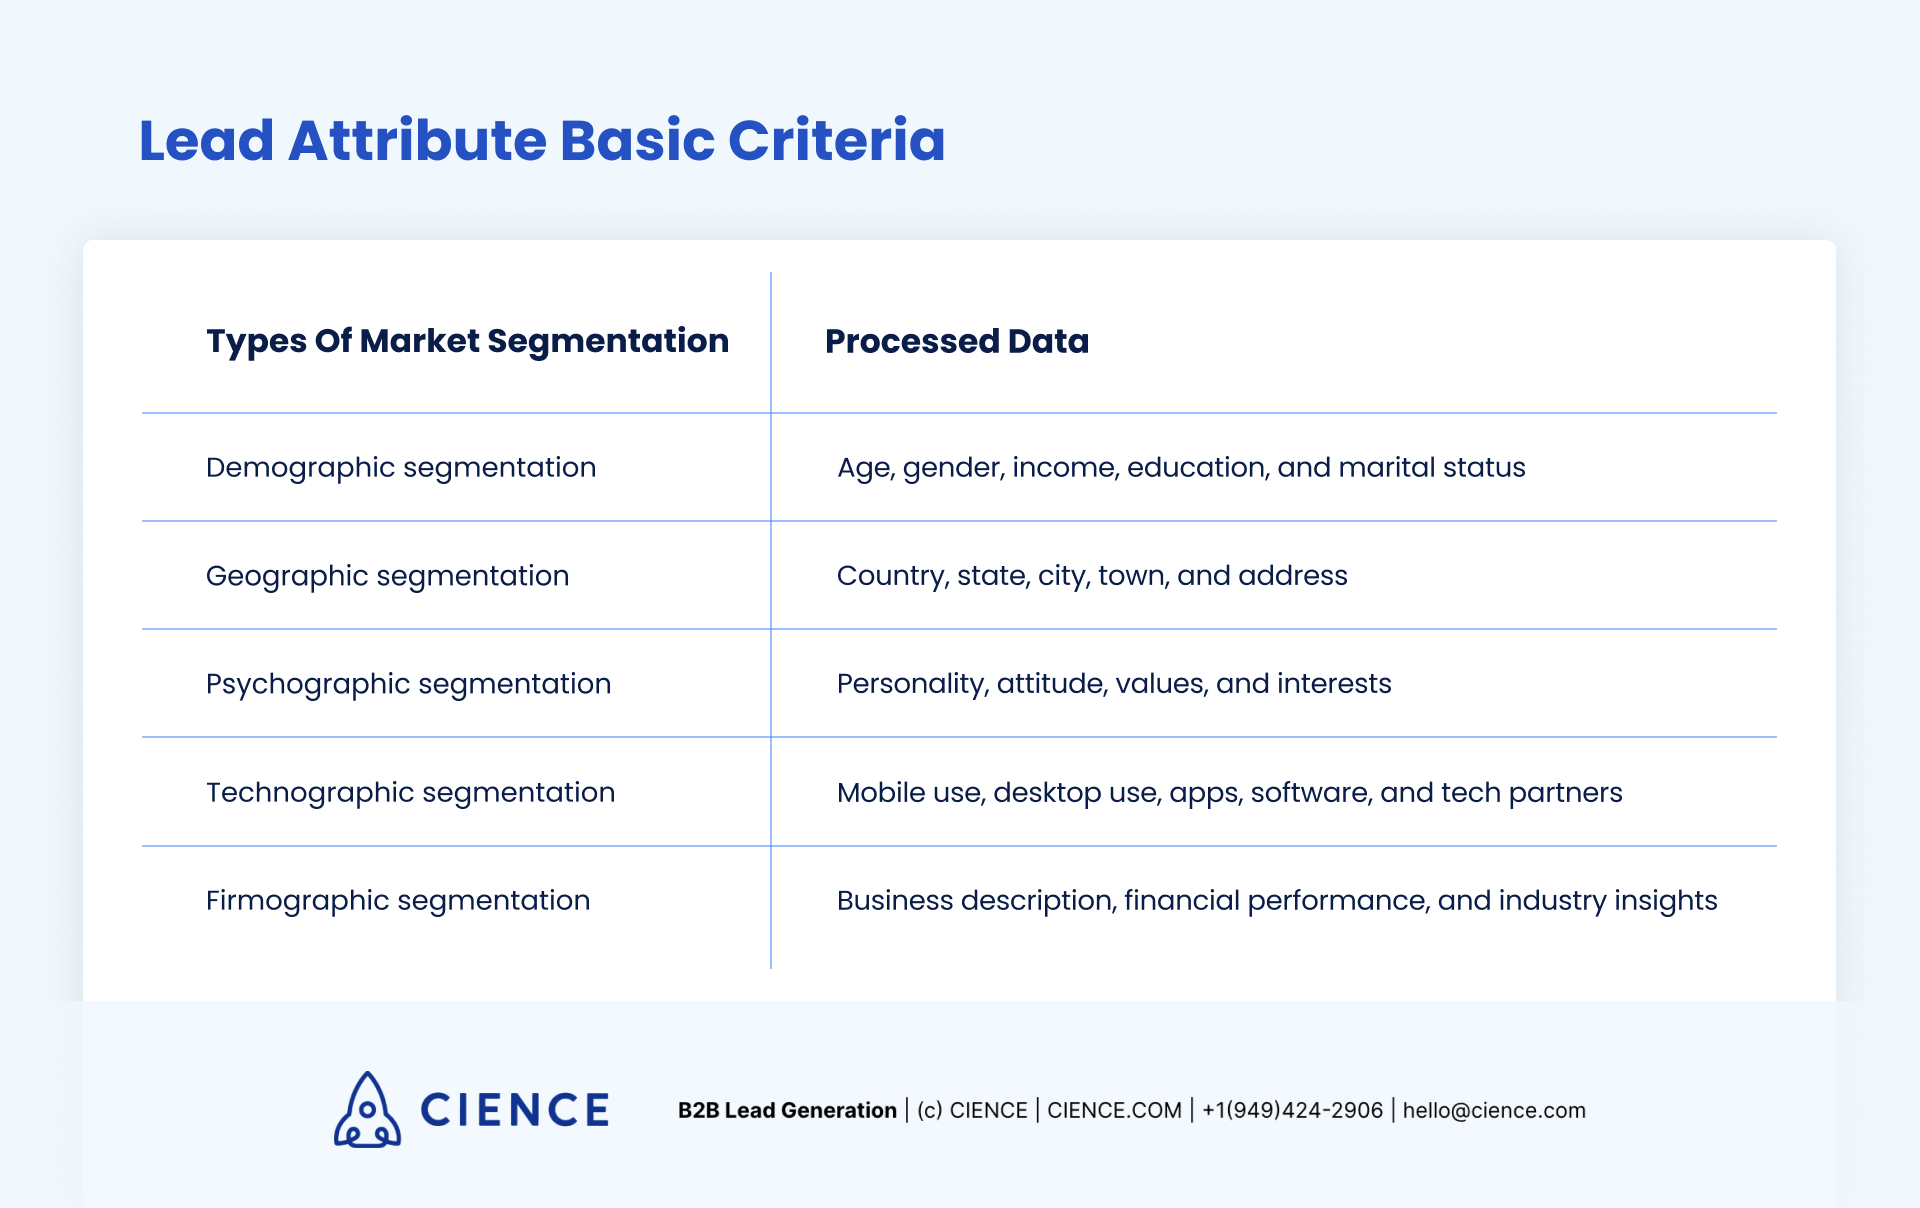 Lead attribute basic criteria